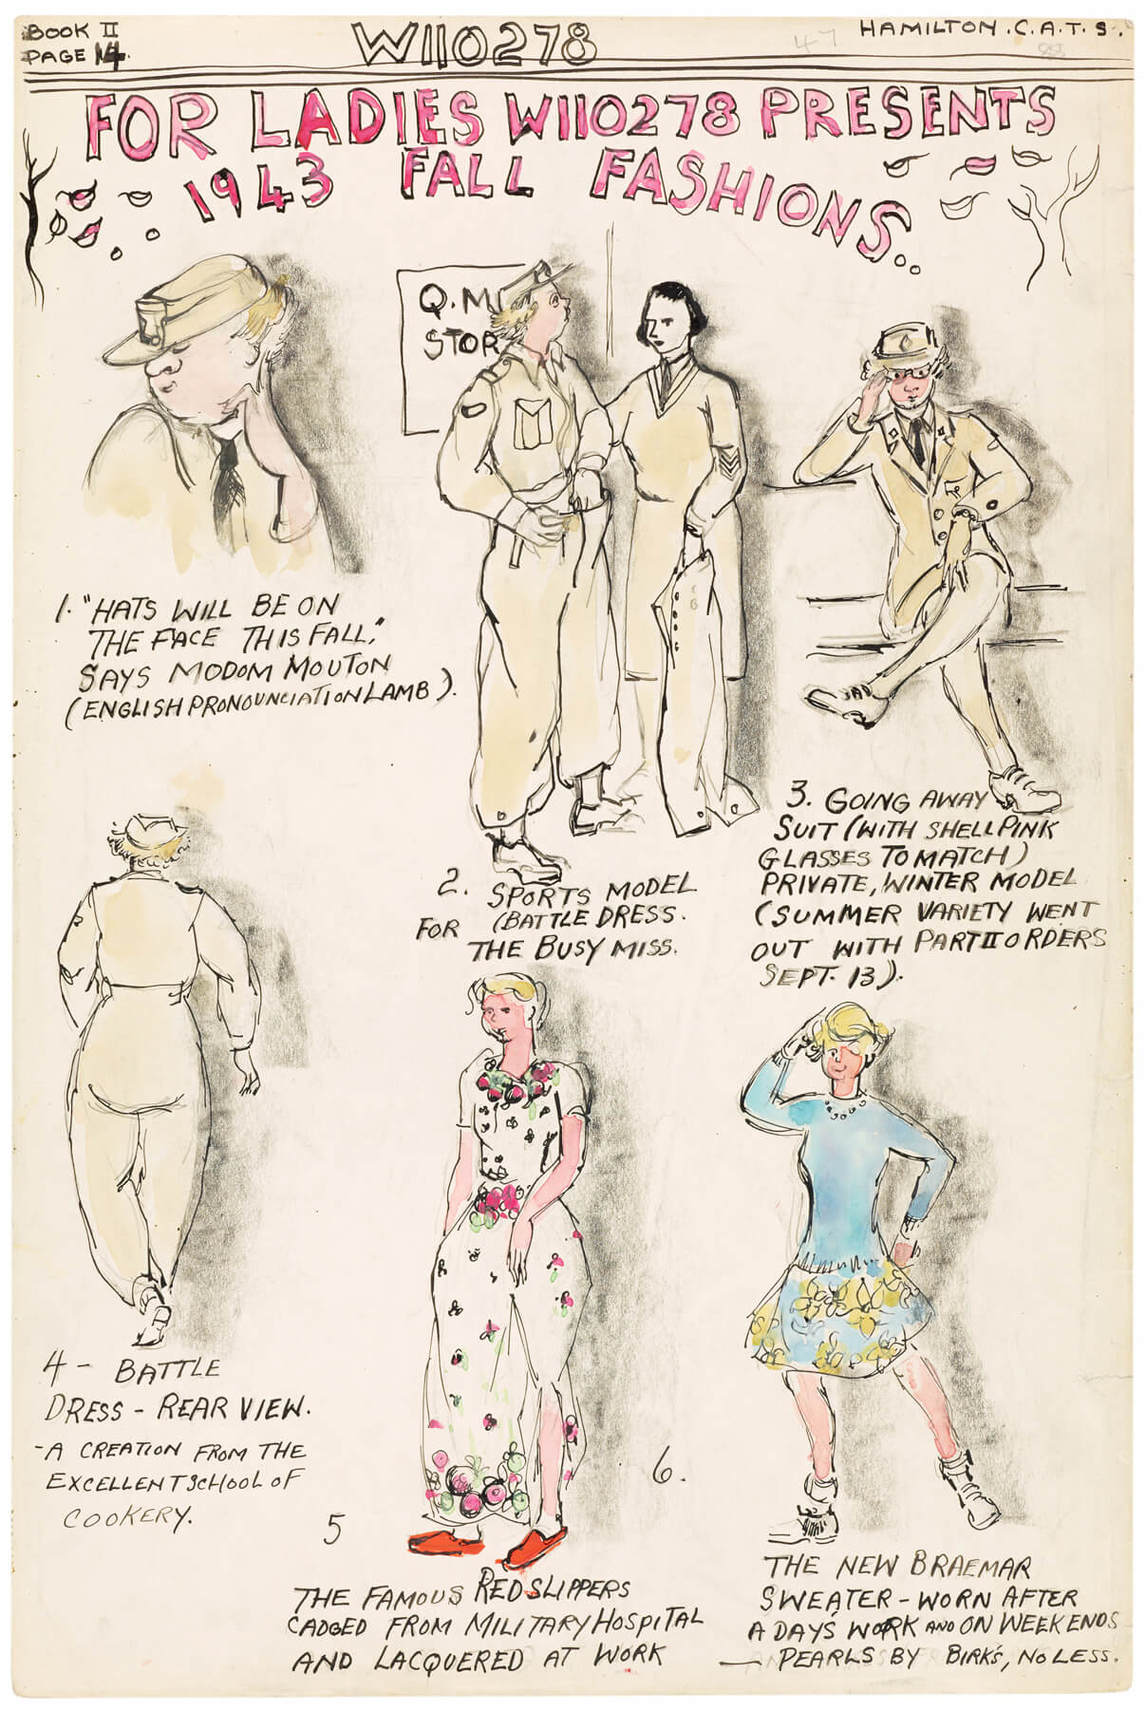 Molly Lamb, For Ladies, W110278 Presents 1943 Fall Fashions